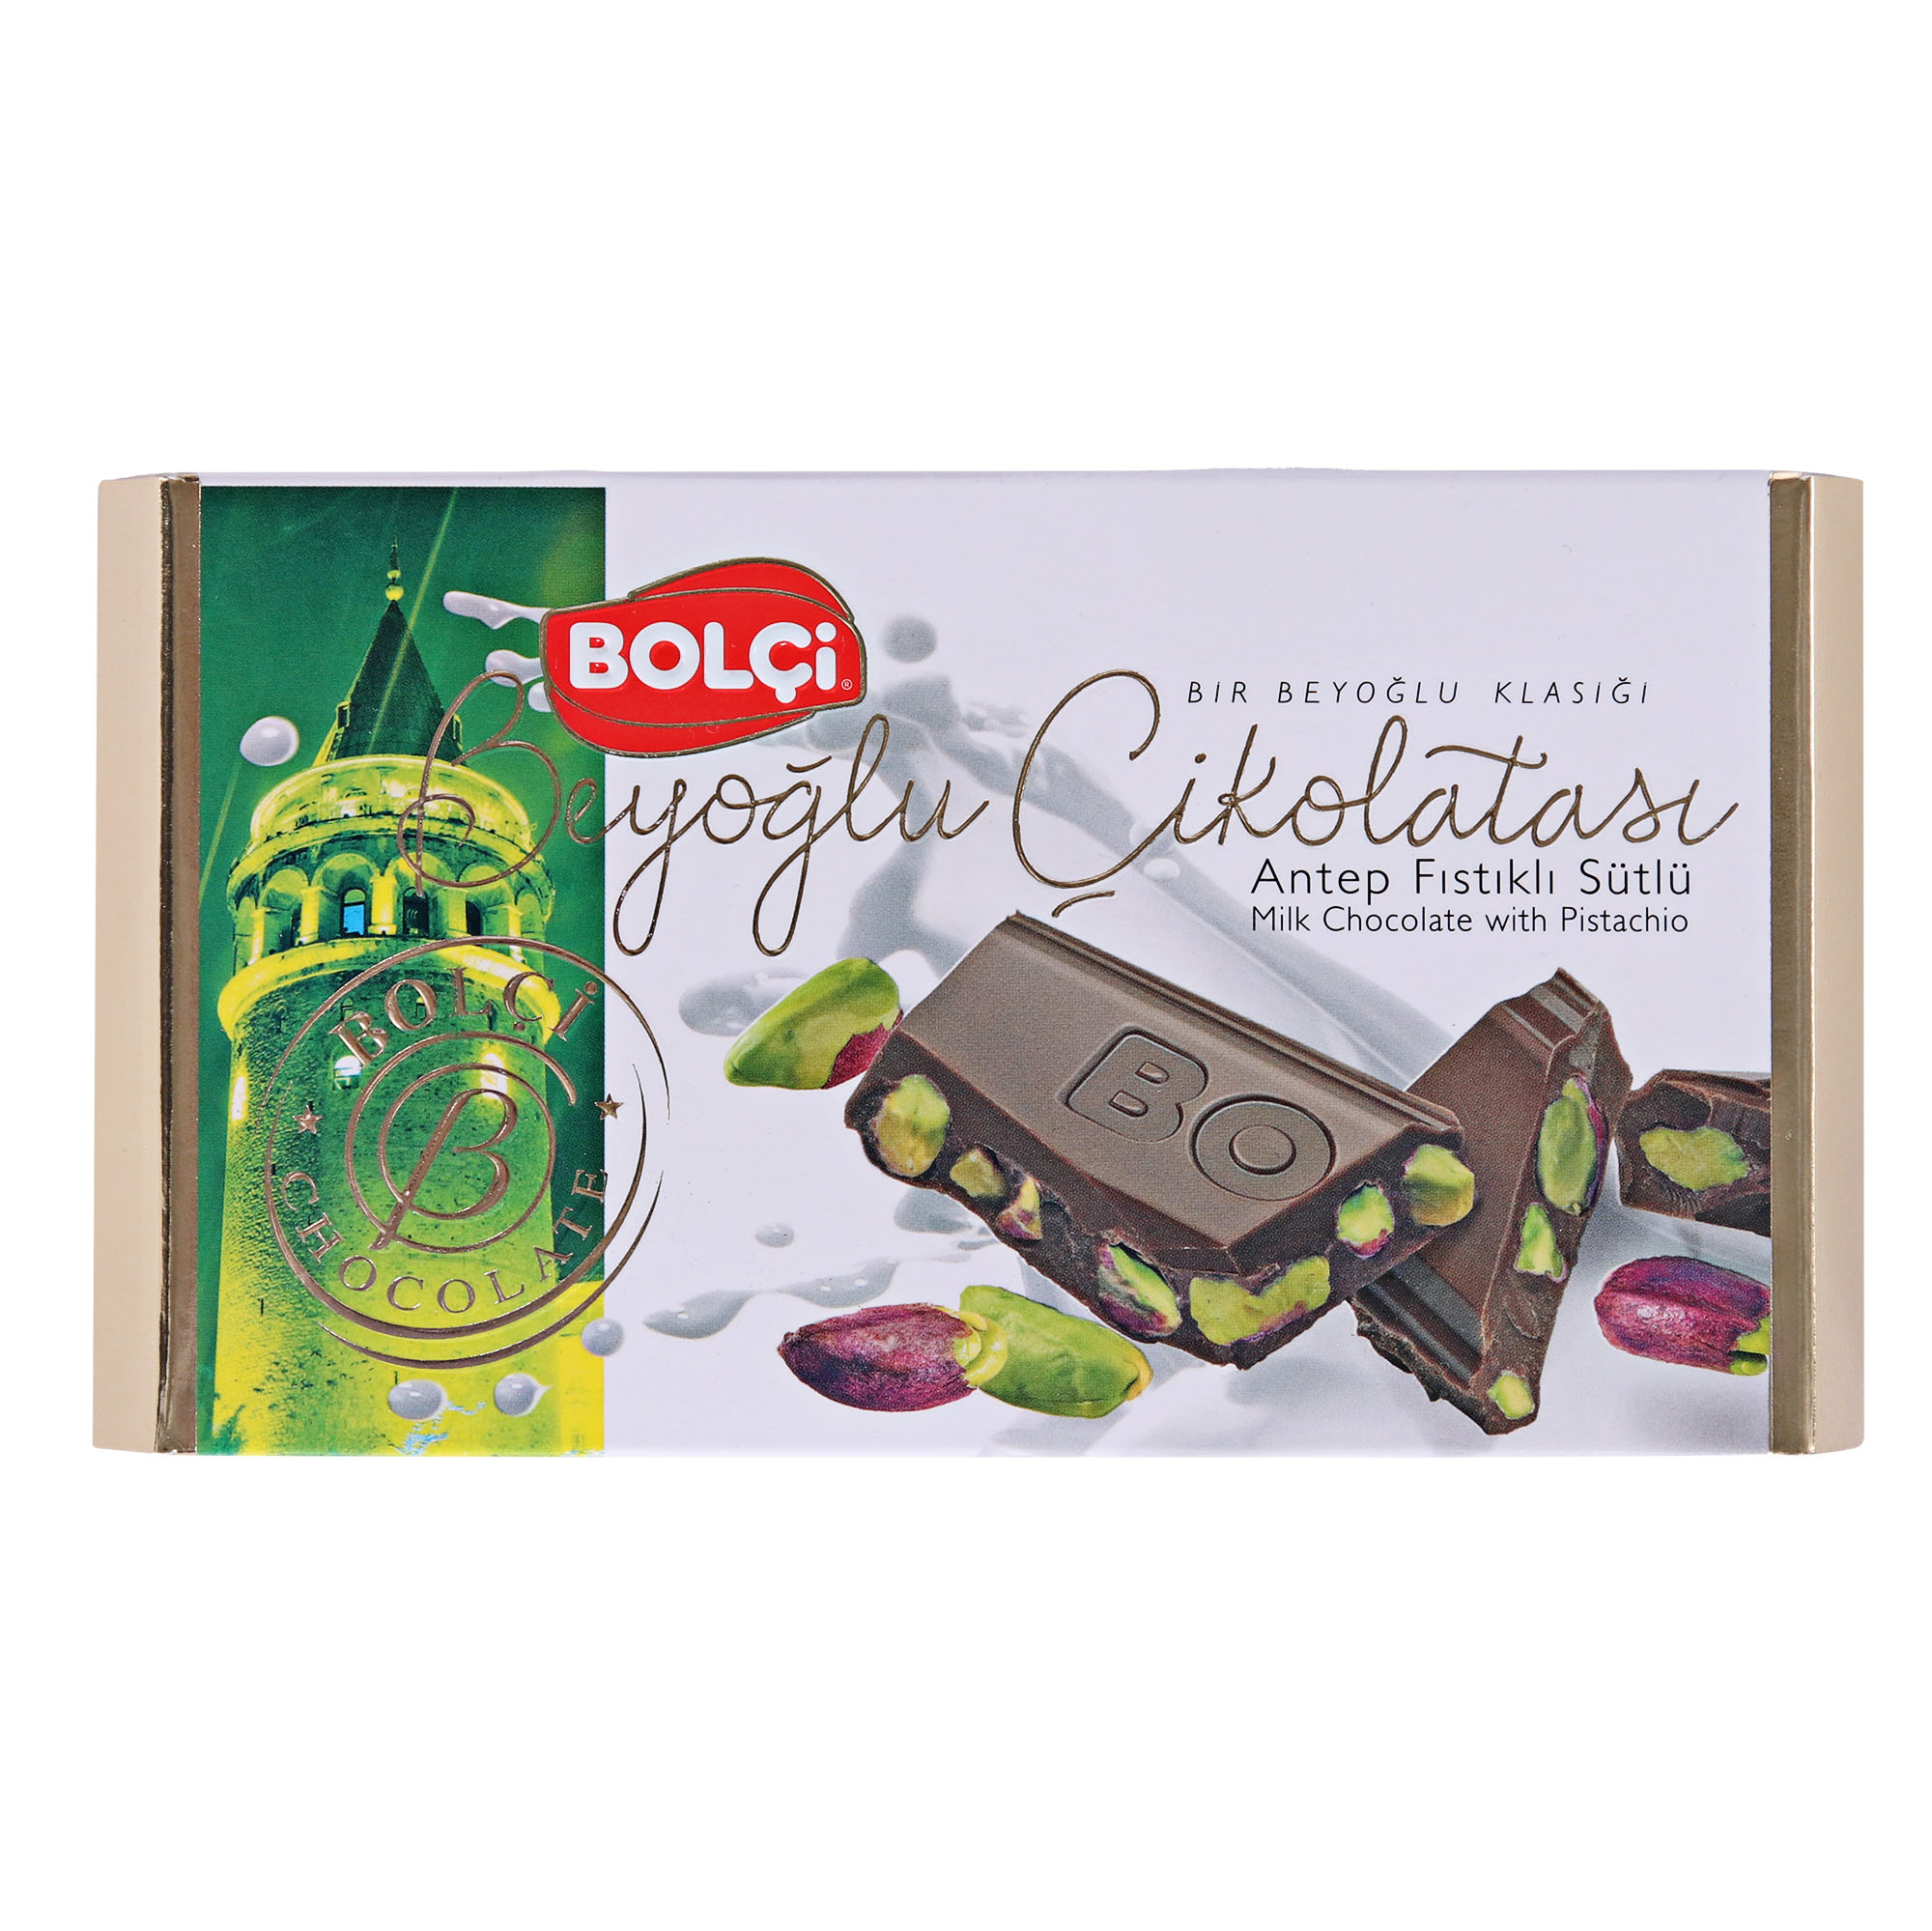 Молочный шоколад Bolci с цельной фисташкой, 150 г шоколад rioba молочный 32% какао 100 гр